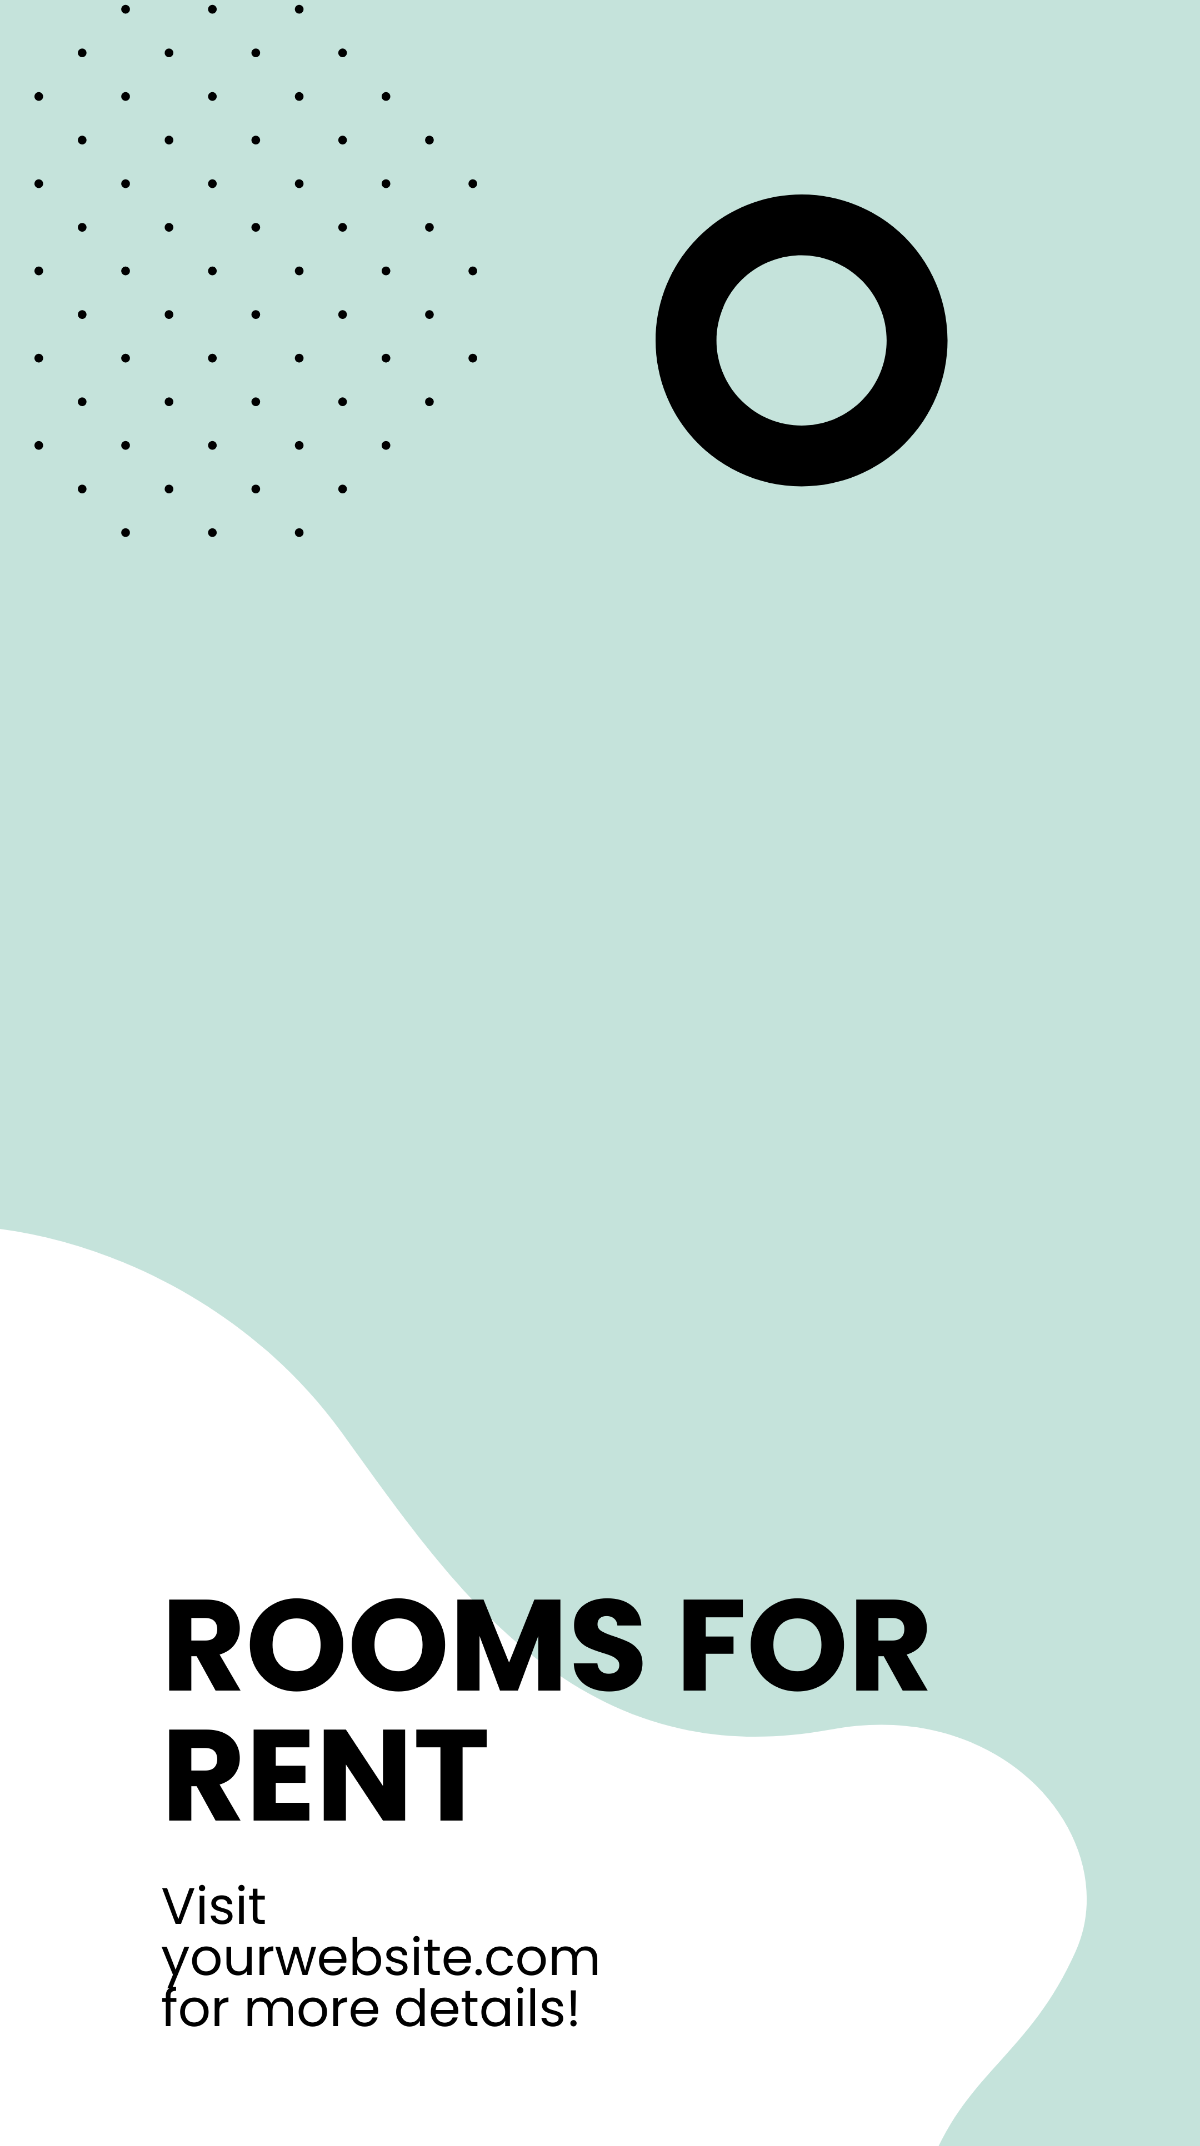 Free Room Rental Advertisement Snapchat Geofilter Template